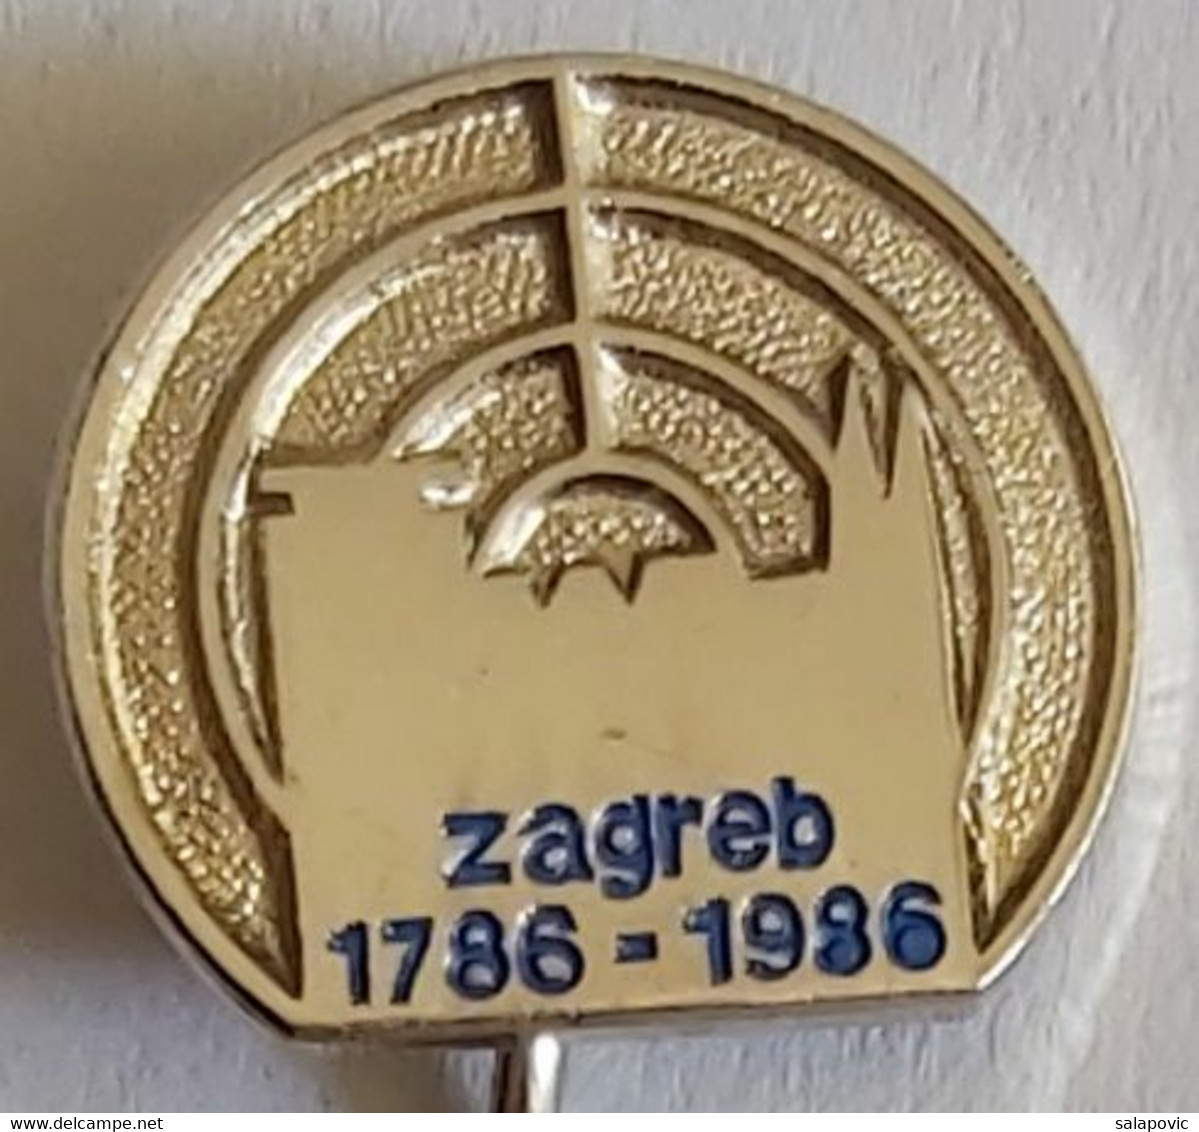 Zagreb 1786 - 1986 Croatia Archery Zagreb Shooting Association PIN A6/2 - Tir à L'Arc